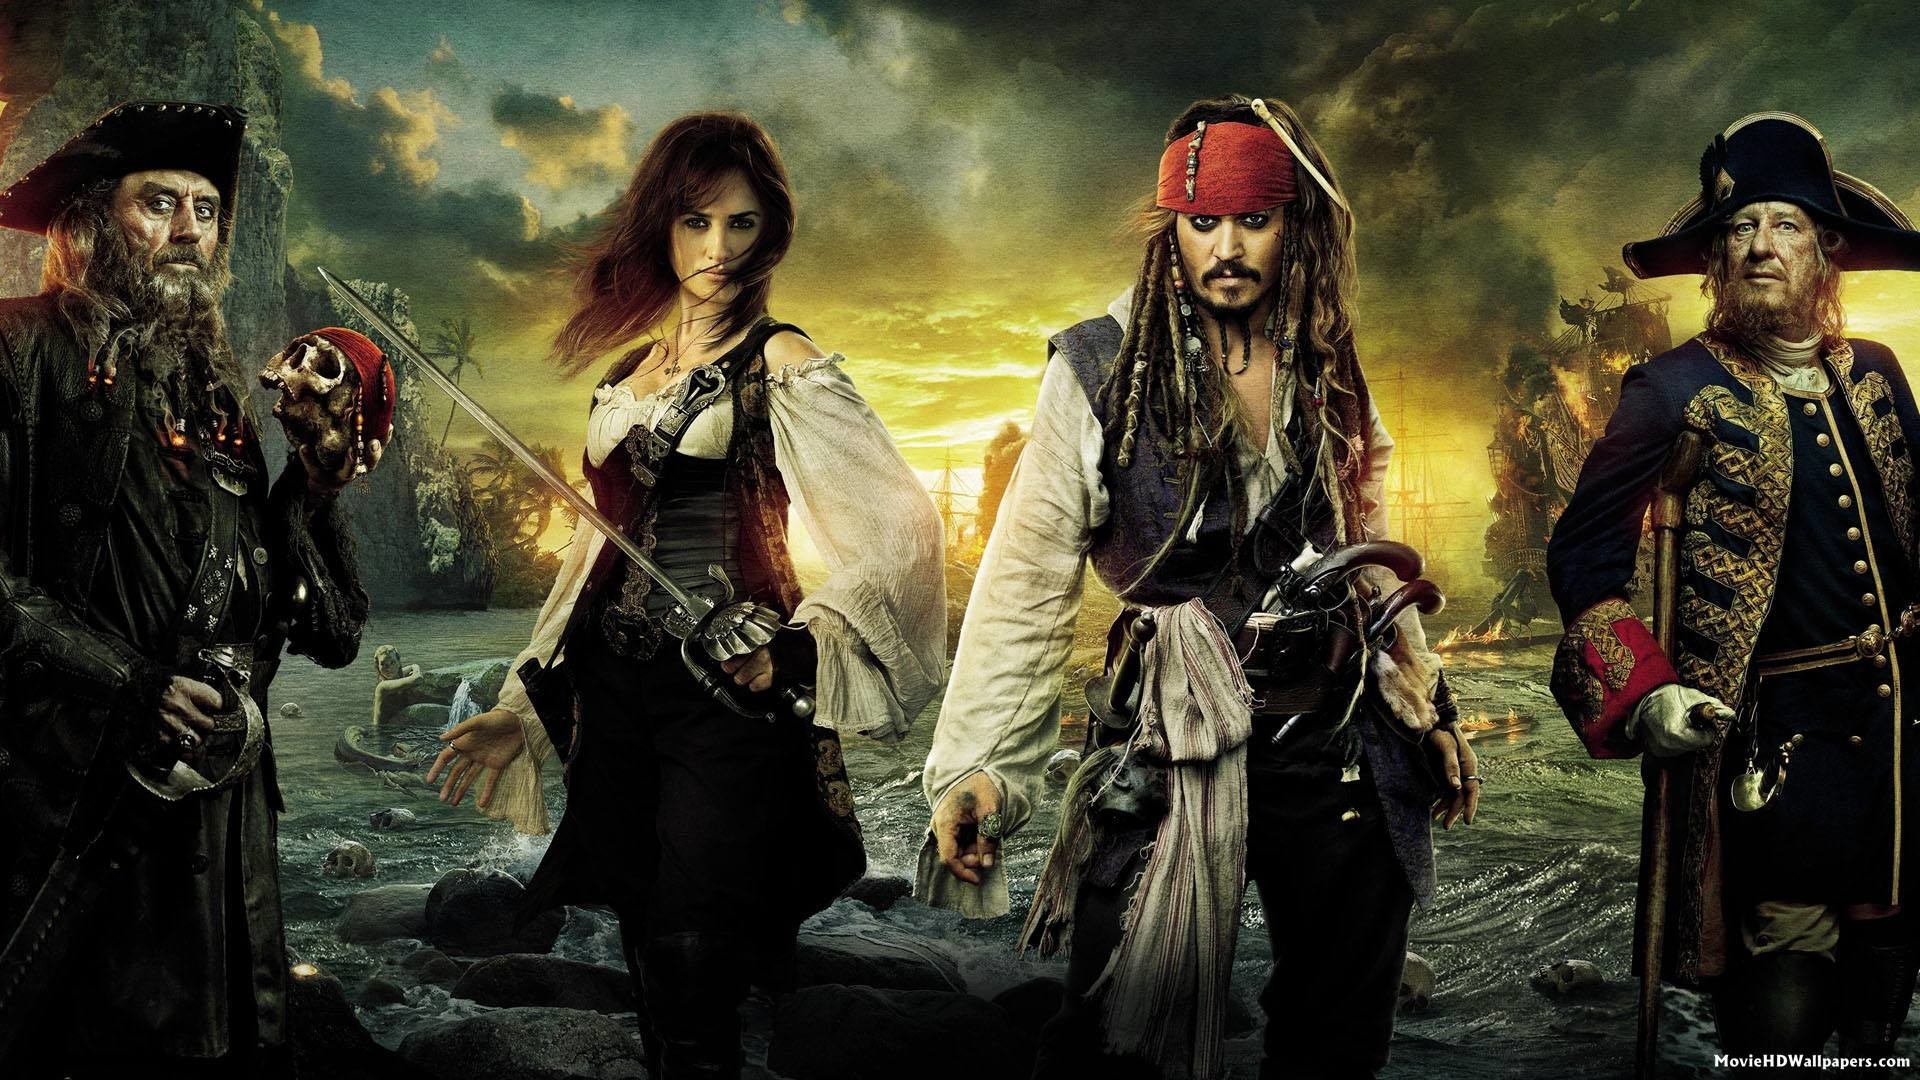 1920x1080 2560x1440 Pirates of the Caribbean wallpaper Jack Sparrow